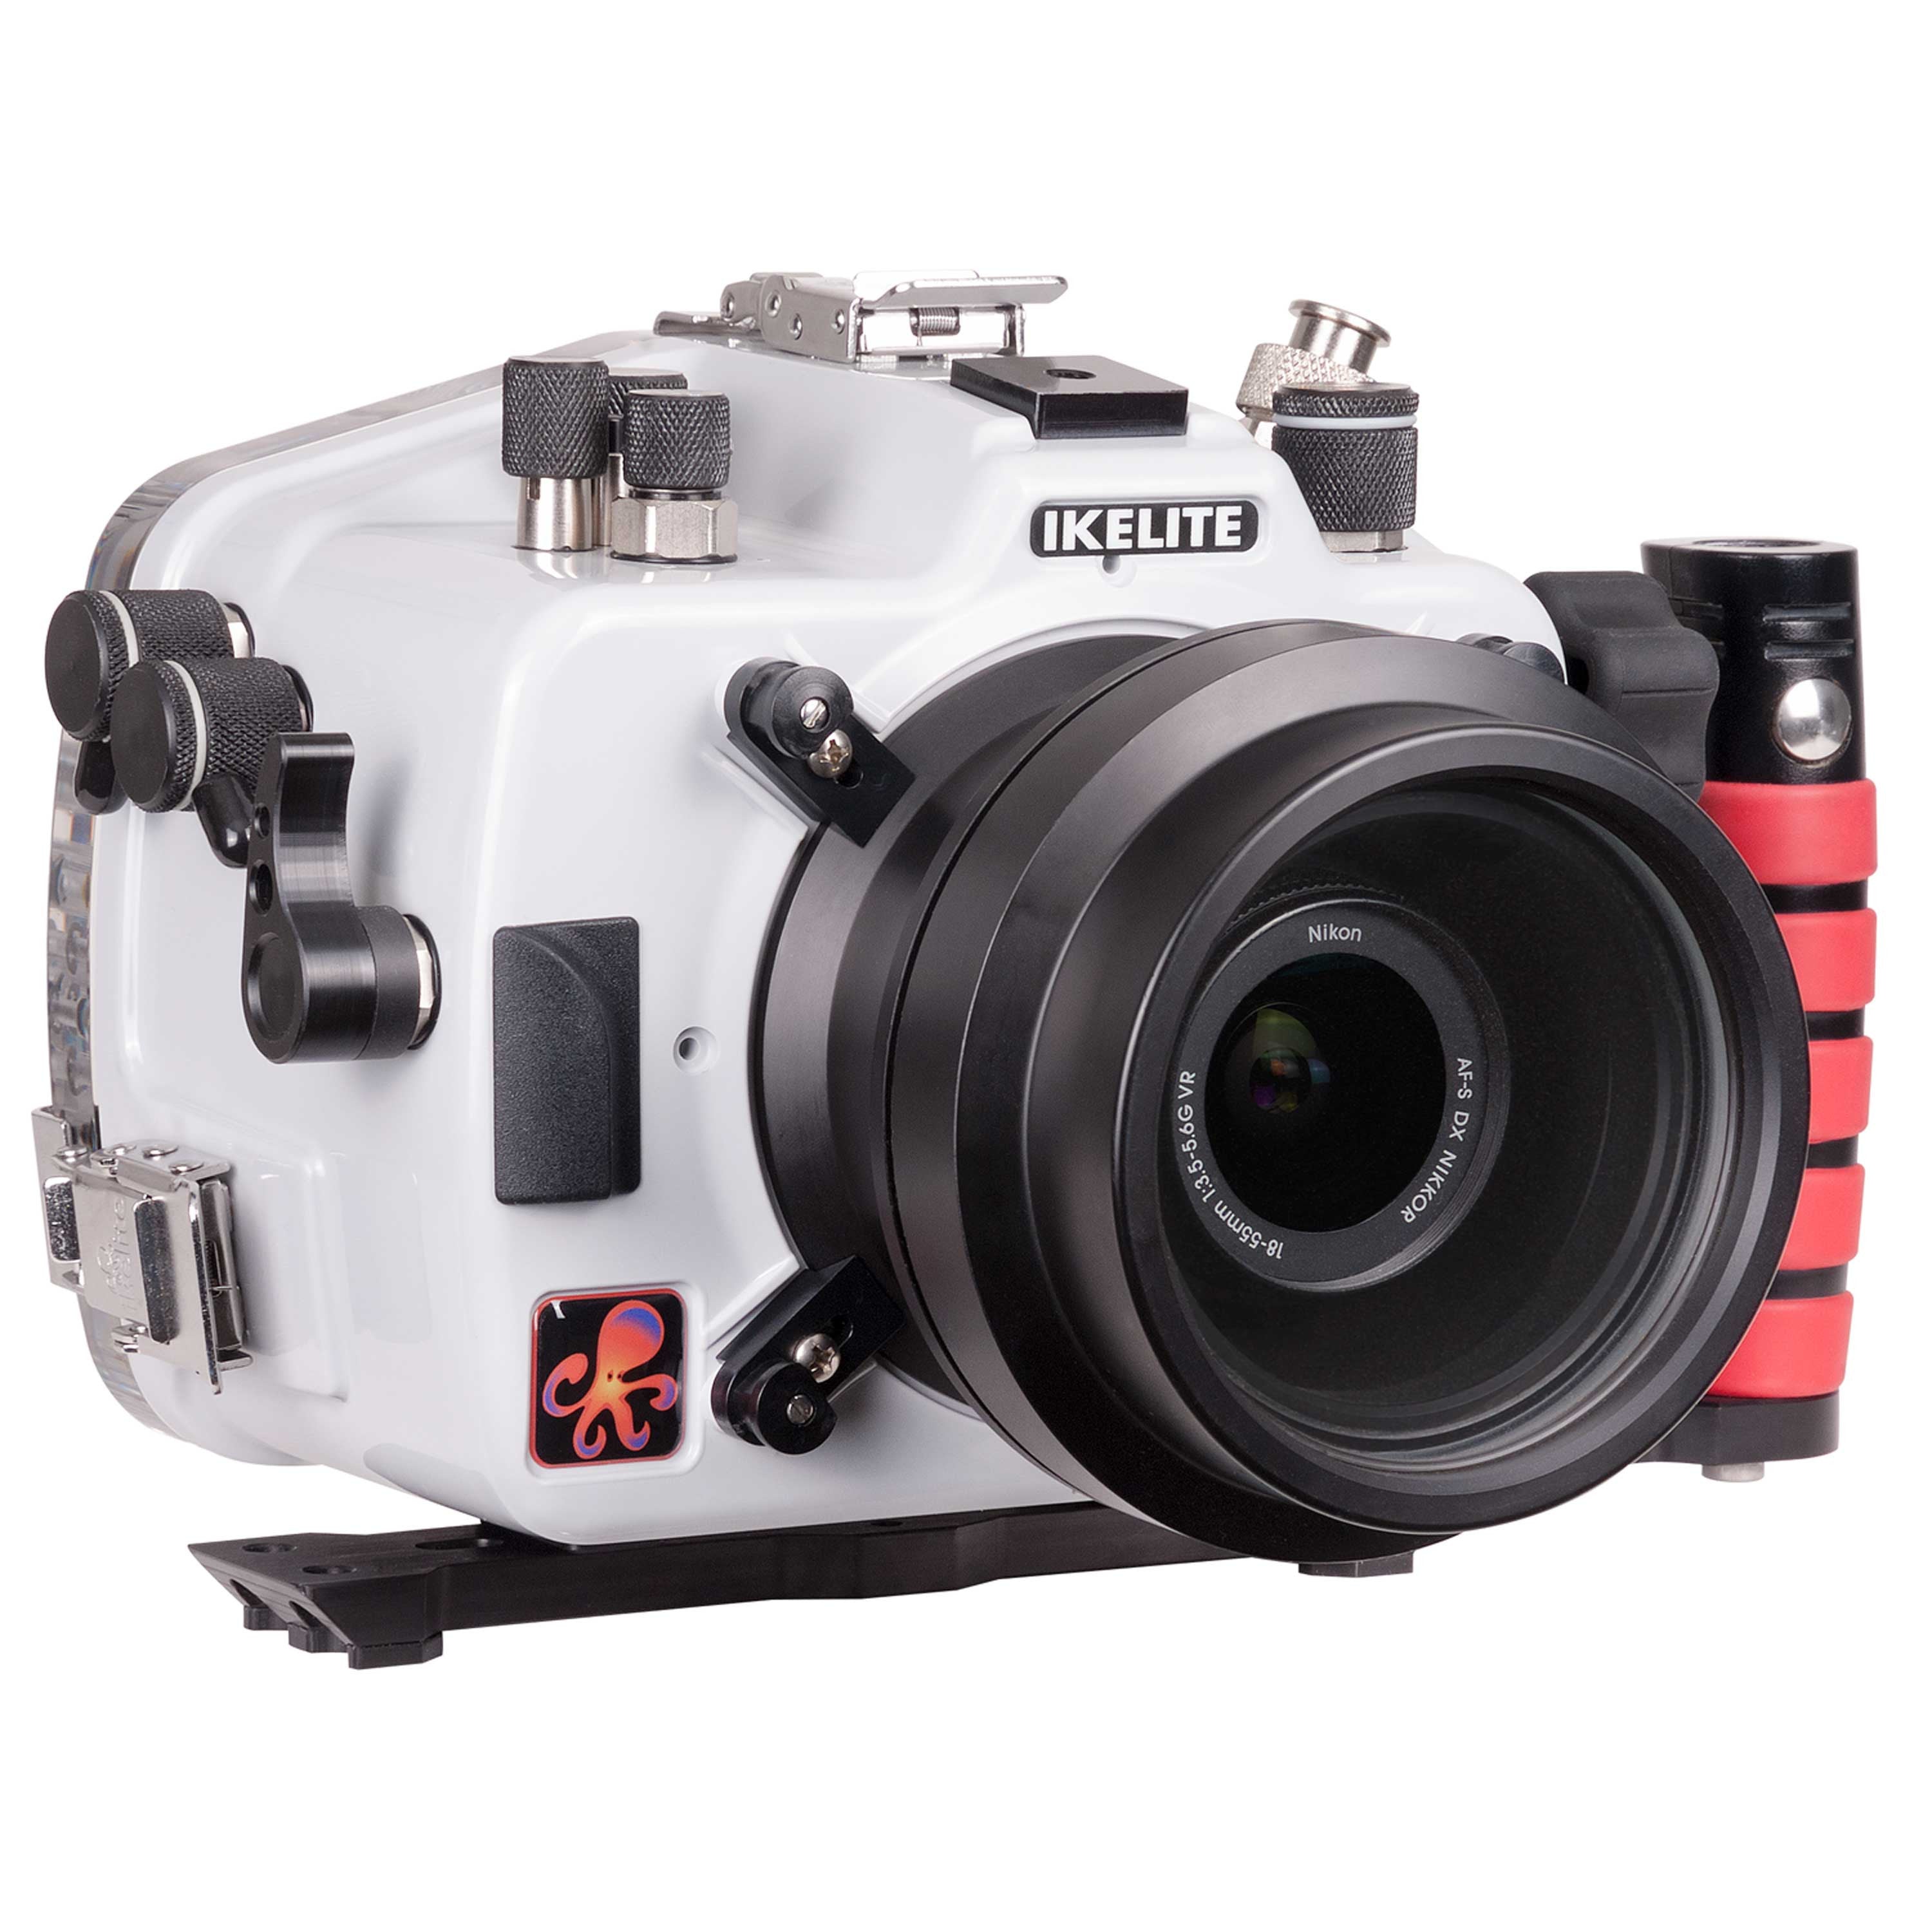 200FL Underwater TTL Housing for Nikon D3300, D3400 DSLR Cameras